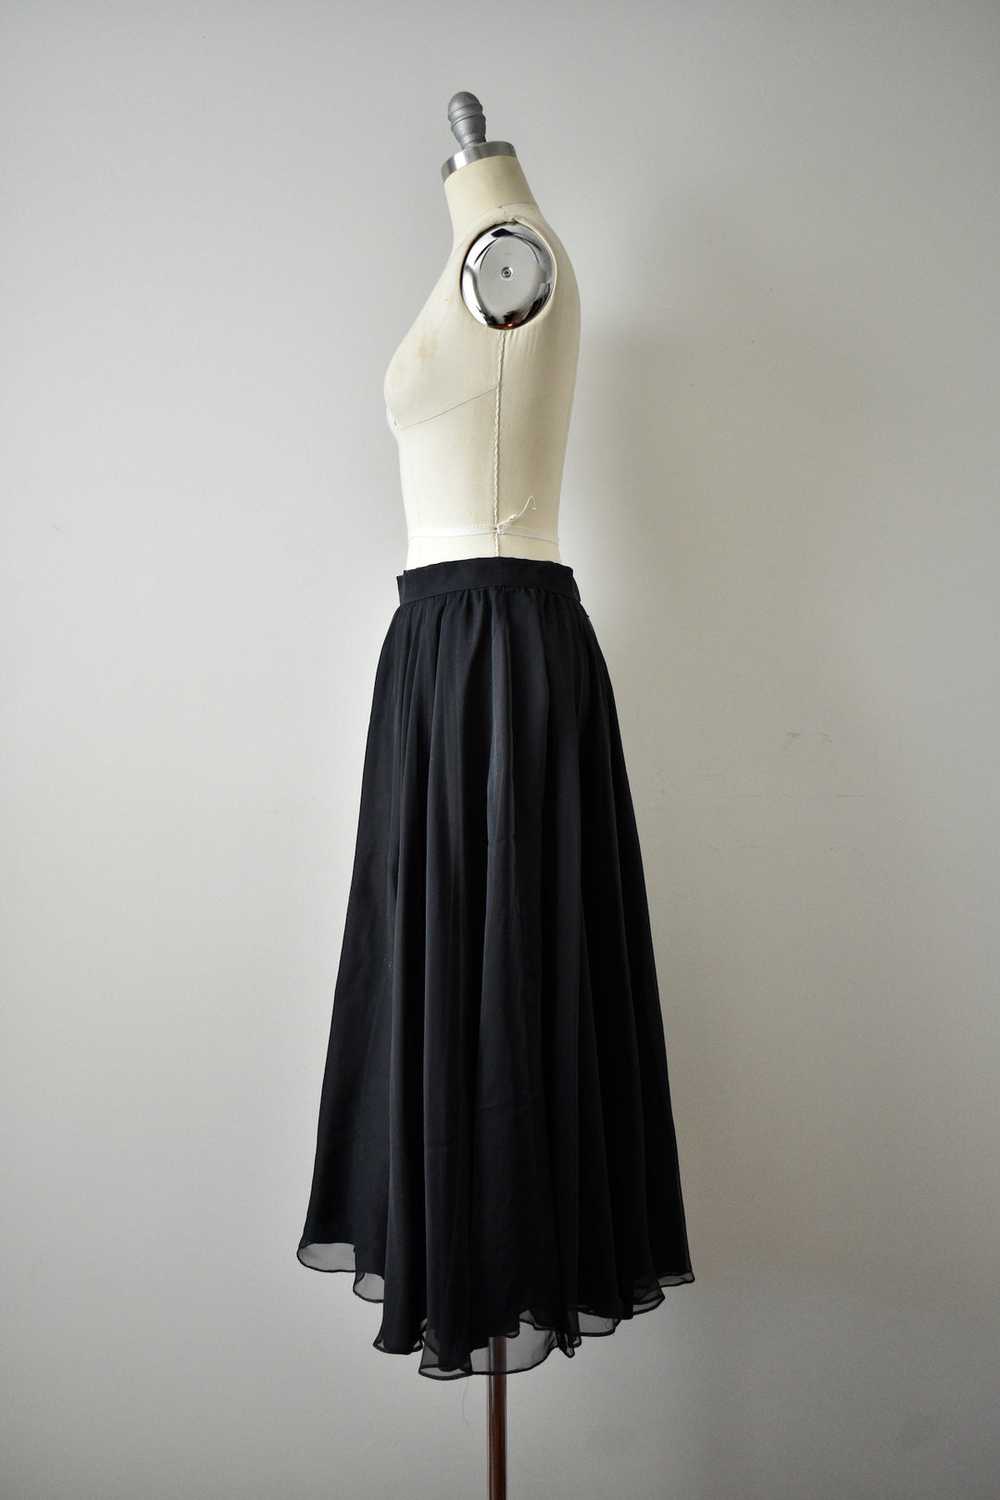 Vintage 1970s Flowy Black Skirt - image 2